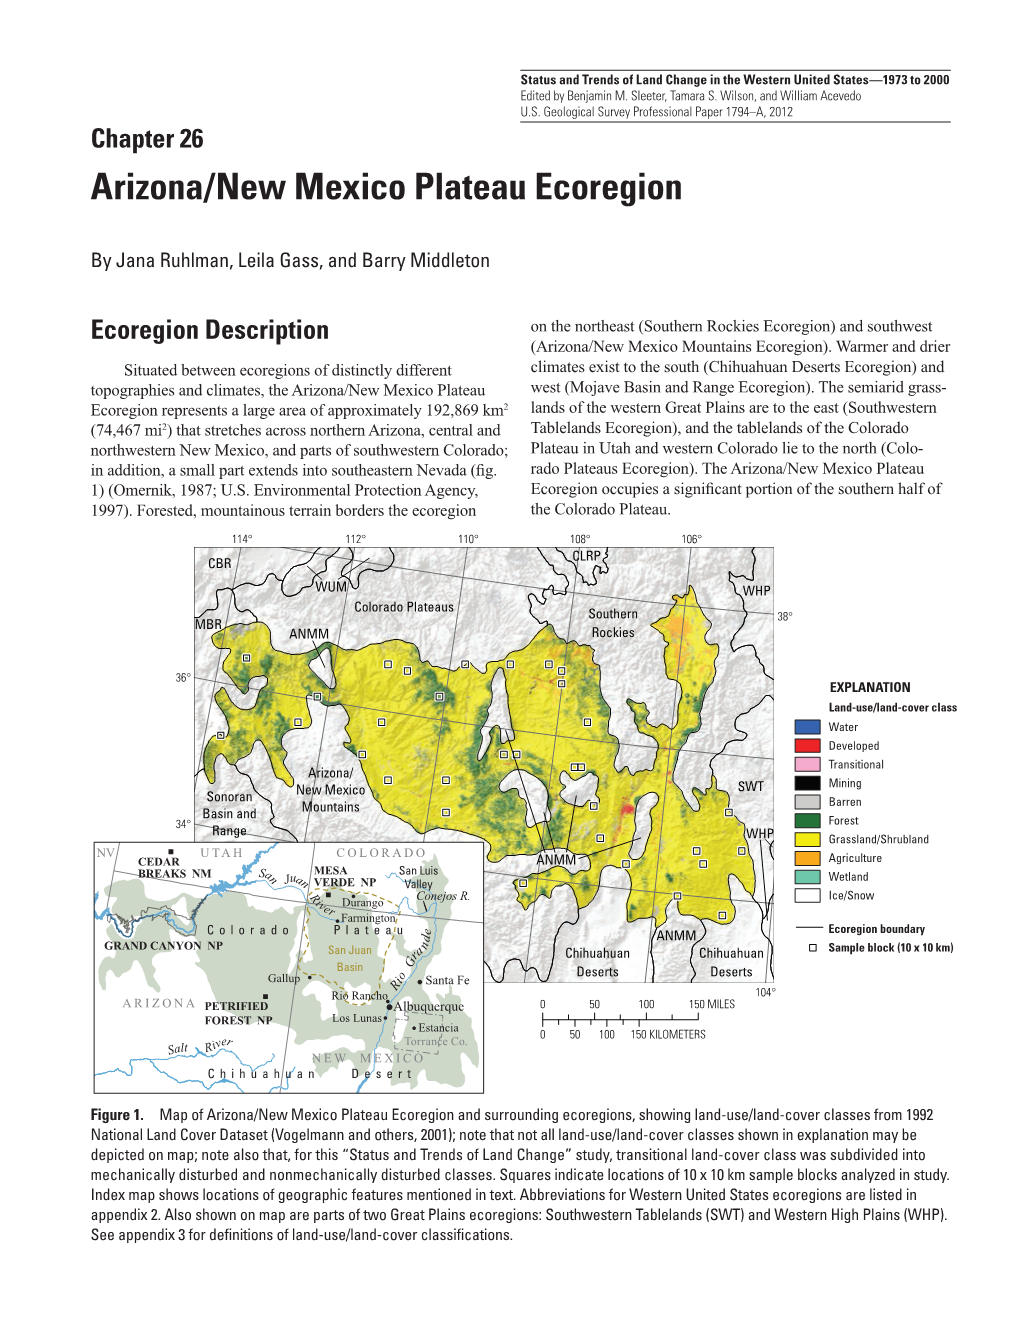 Arizona/New Mexico Plateau Ecoregion